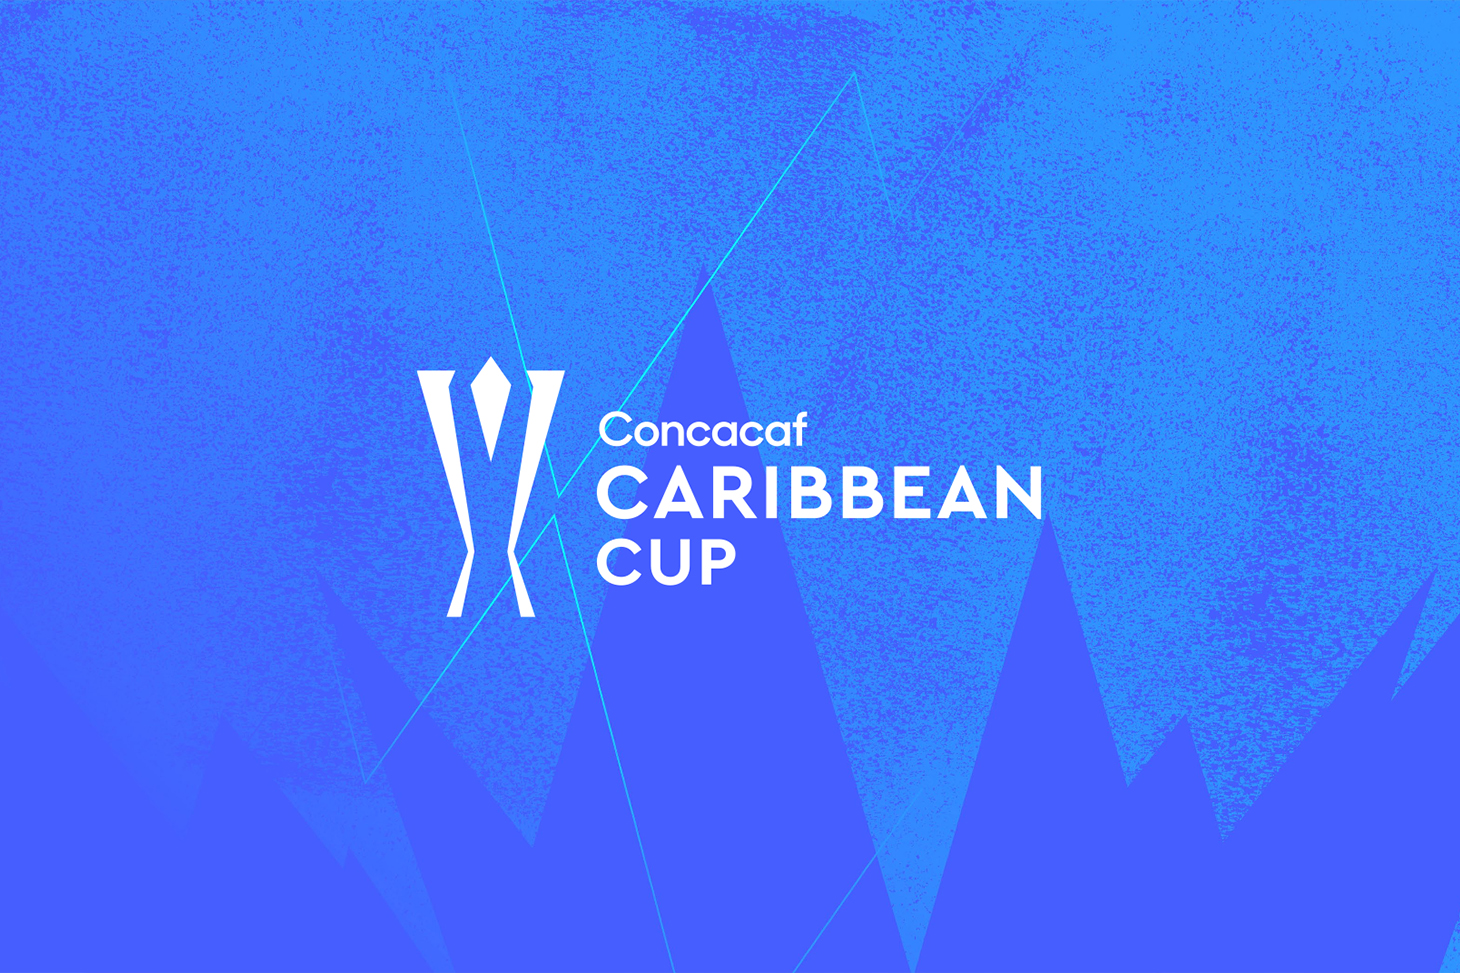 Concacaf Caribbean Cup